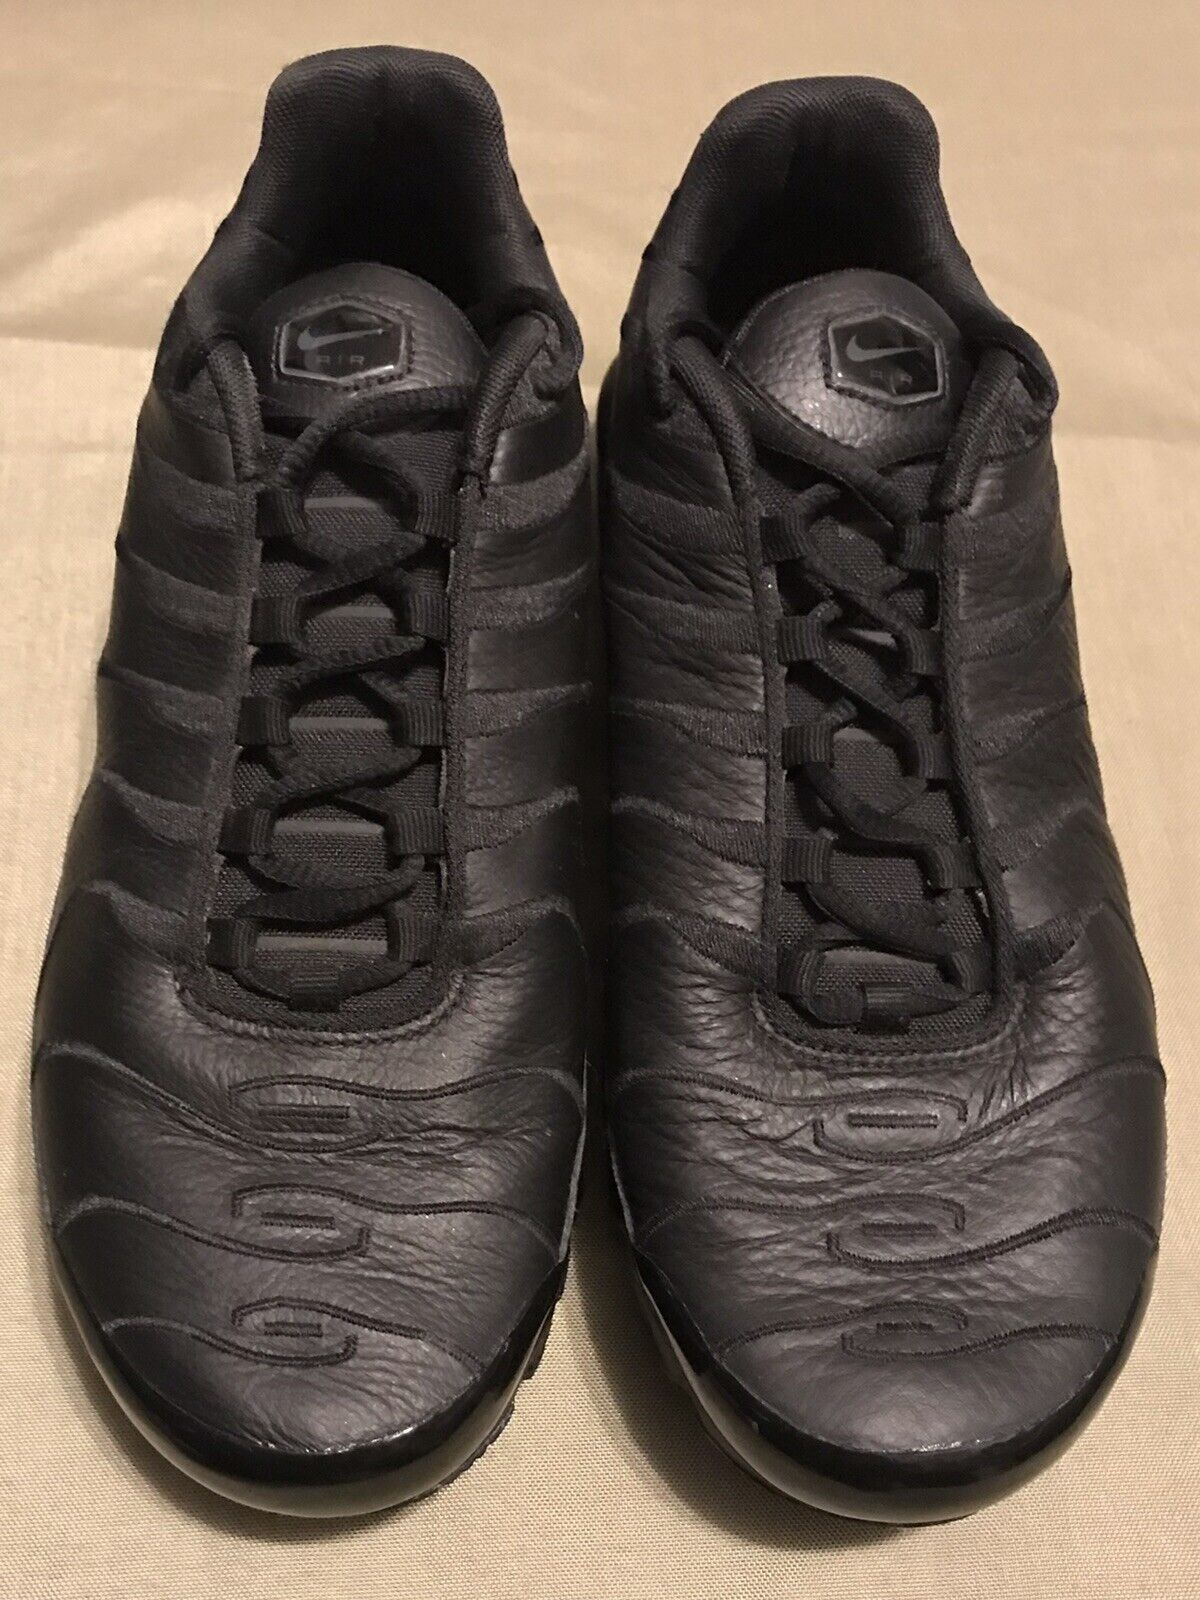 2019 Mens Nike Air Plus TN Black Leather Sneakers AJ2029-001 Sz | eBay